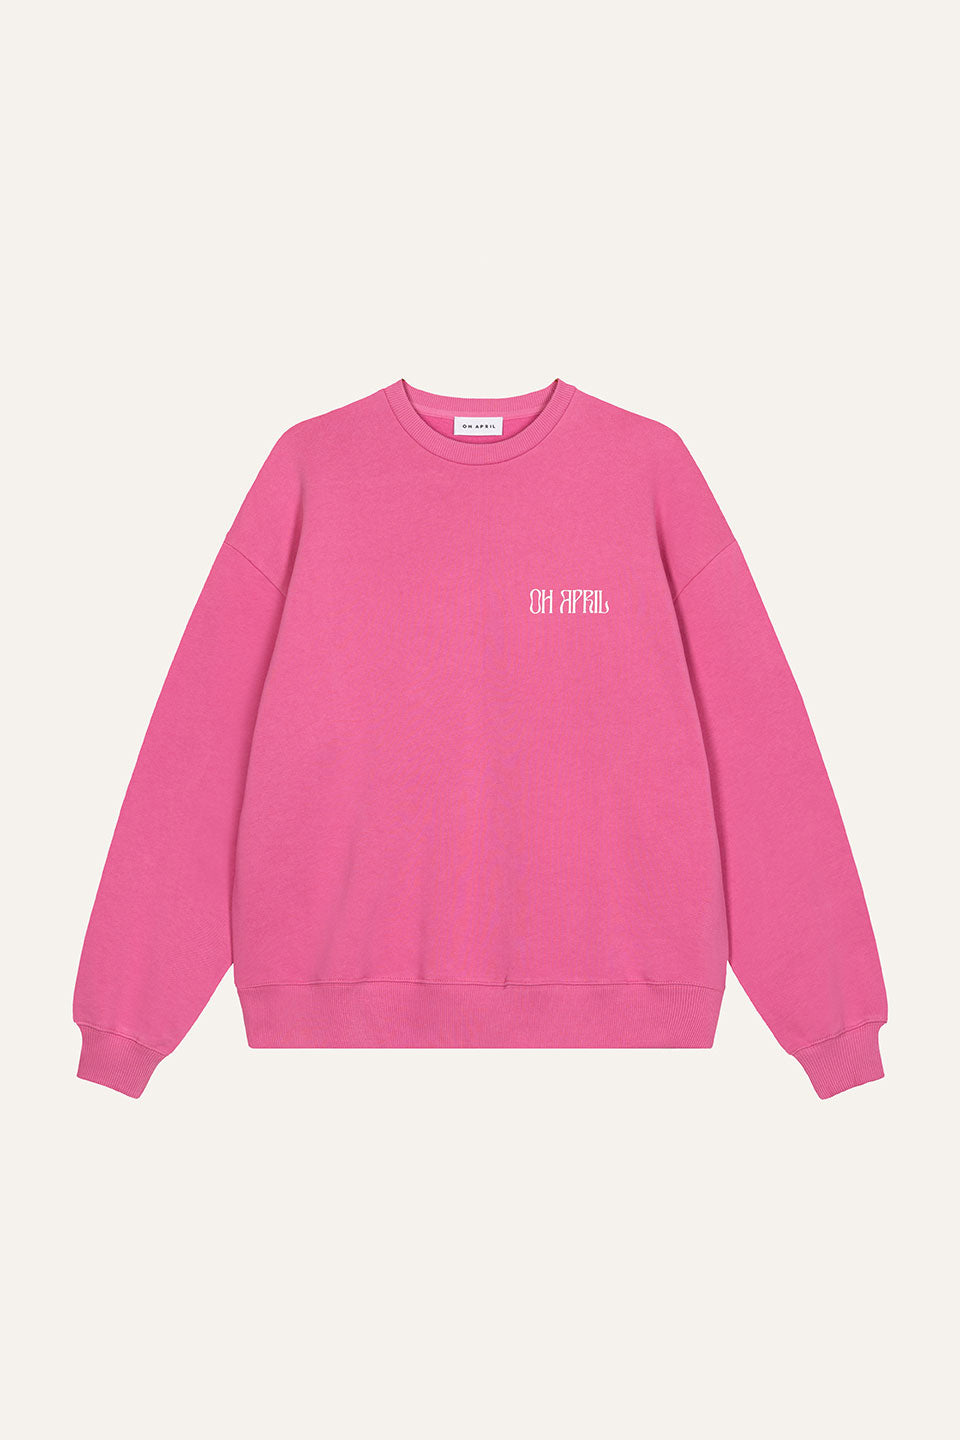 Oversized Sweater Mental Health Light Pink